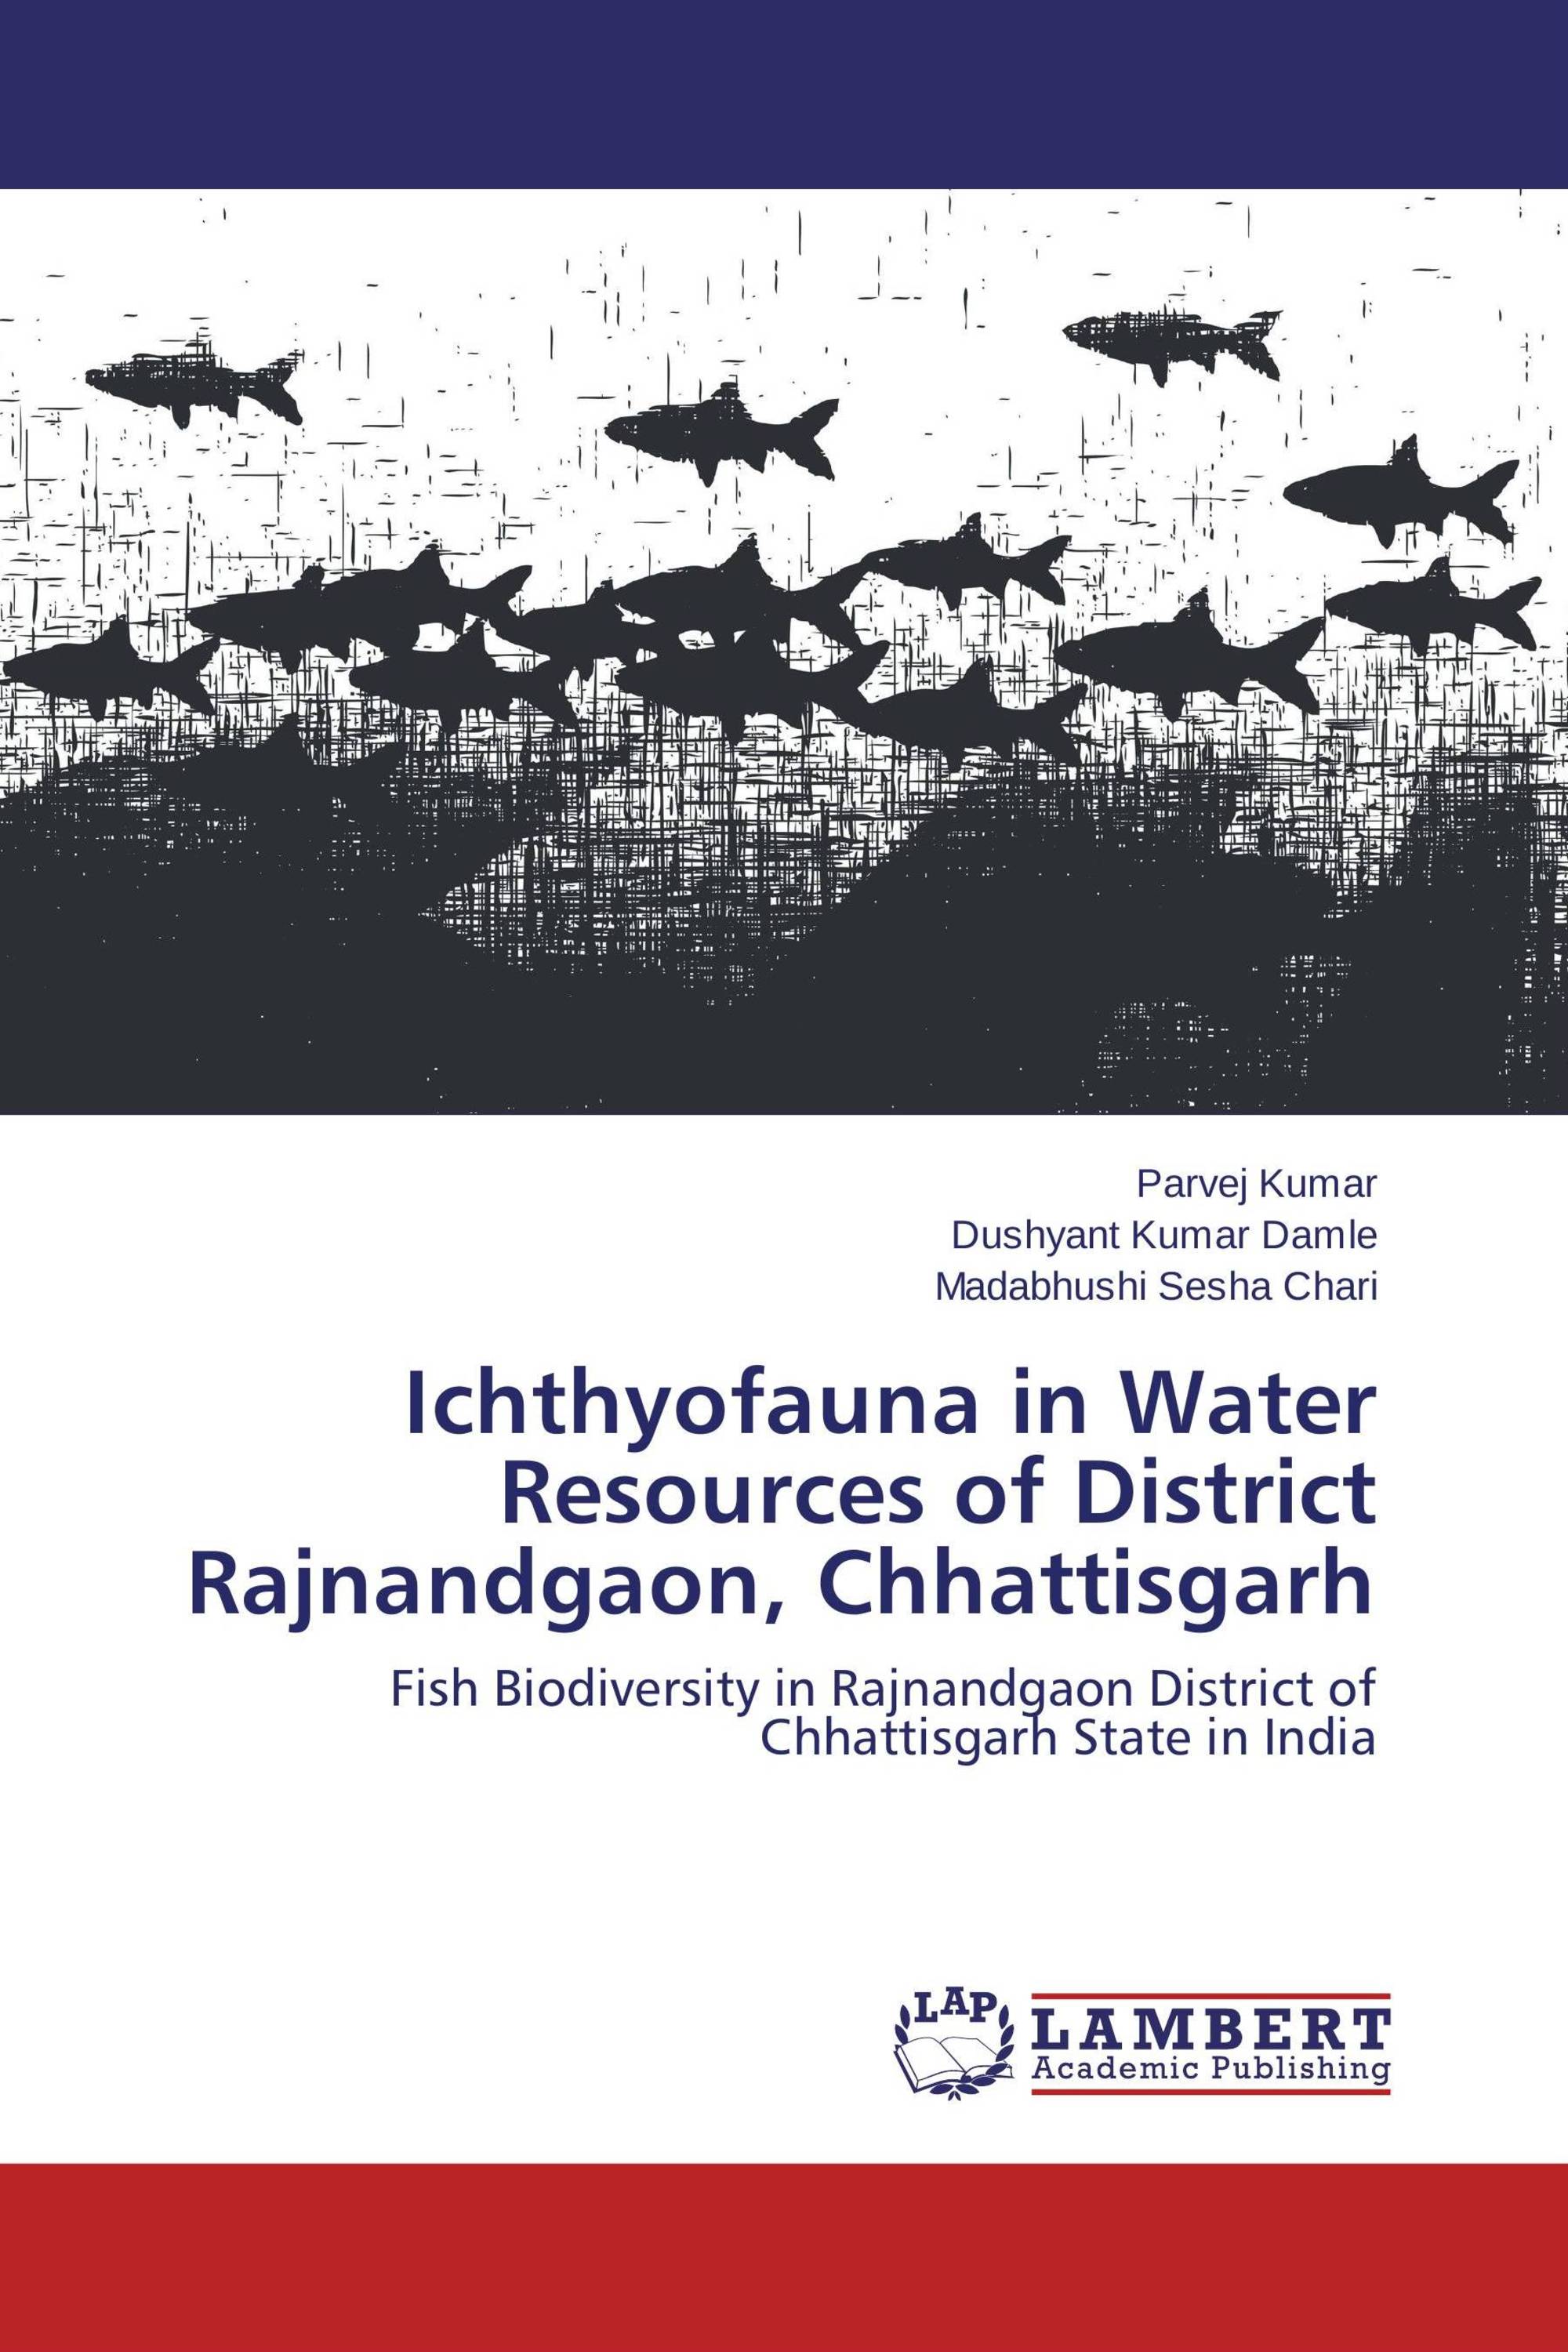 Ichthyofauna in Water Resources of District Rajnandgaon, Chhattisgarh